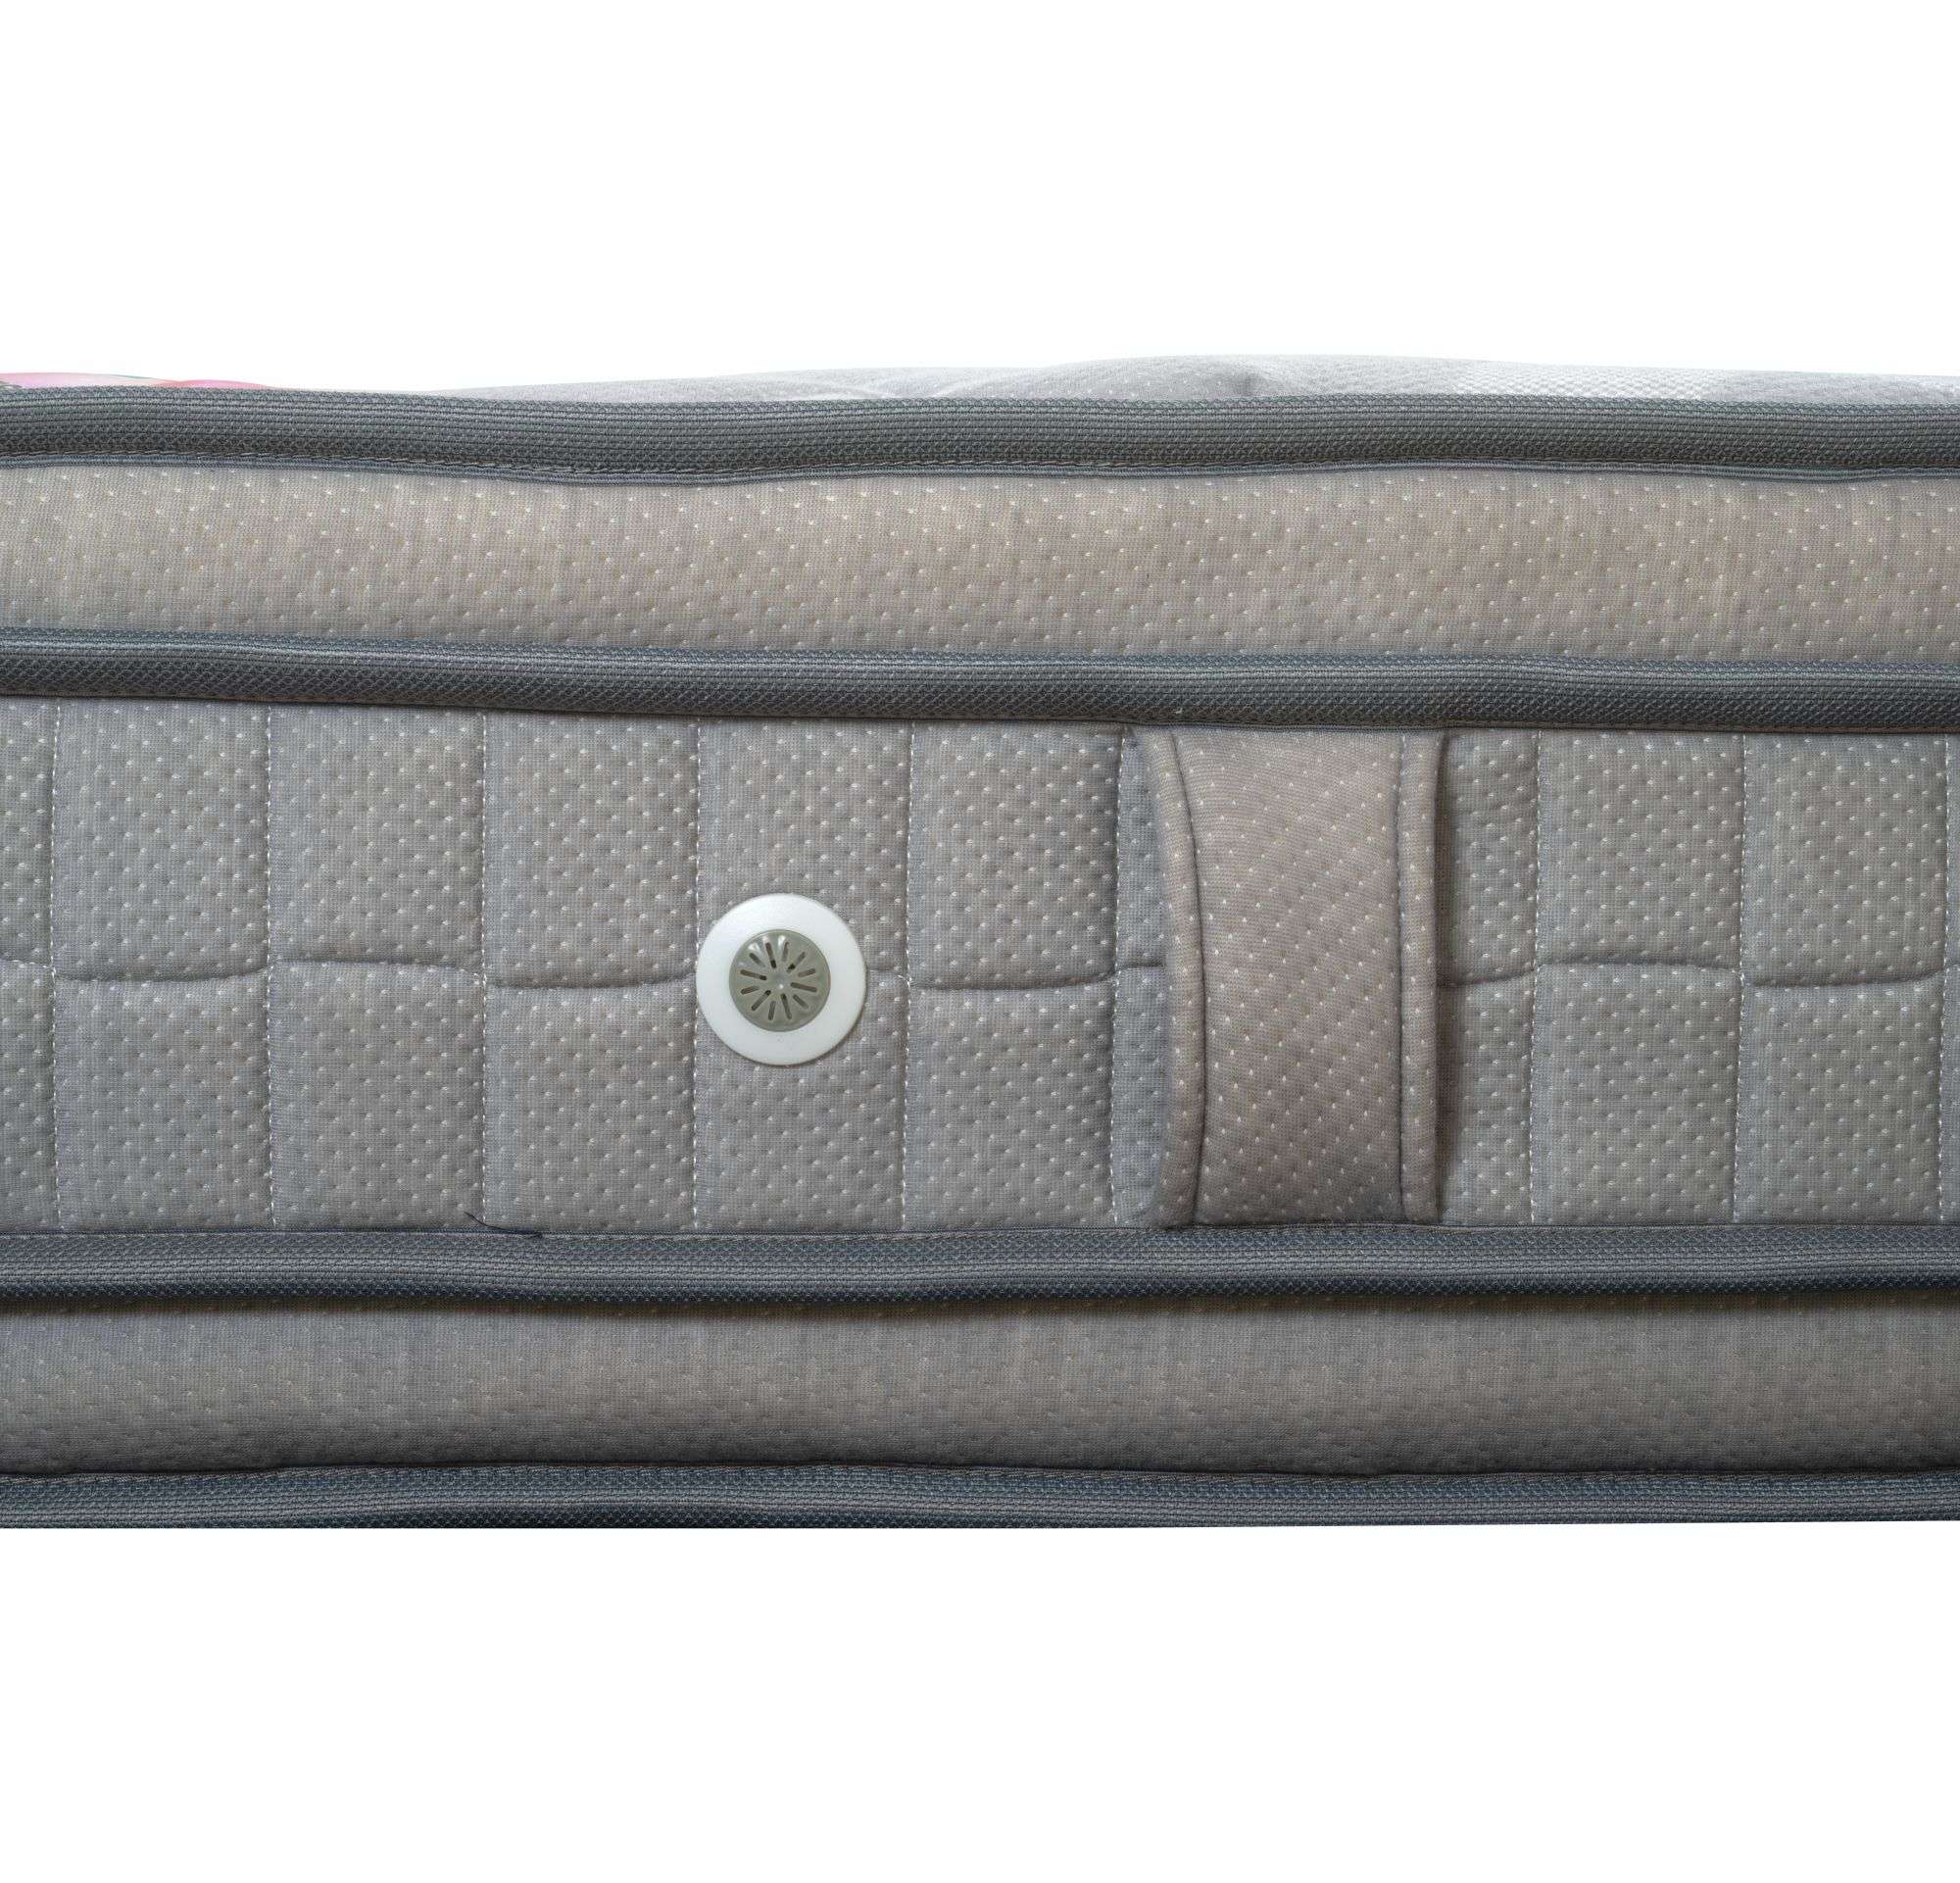 BSDPA787210-Spring Mattress Double Side Pillow Top-TS03